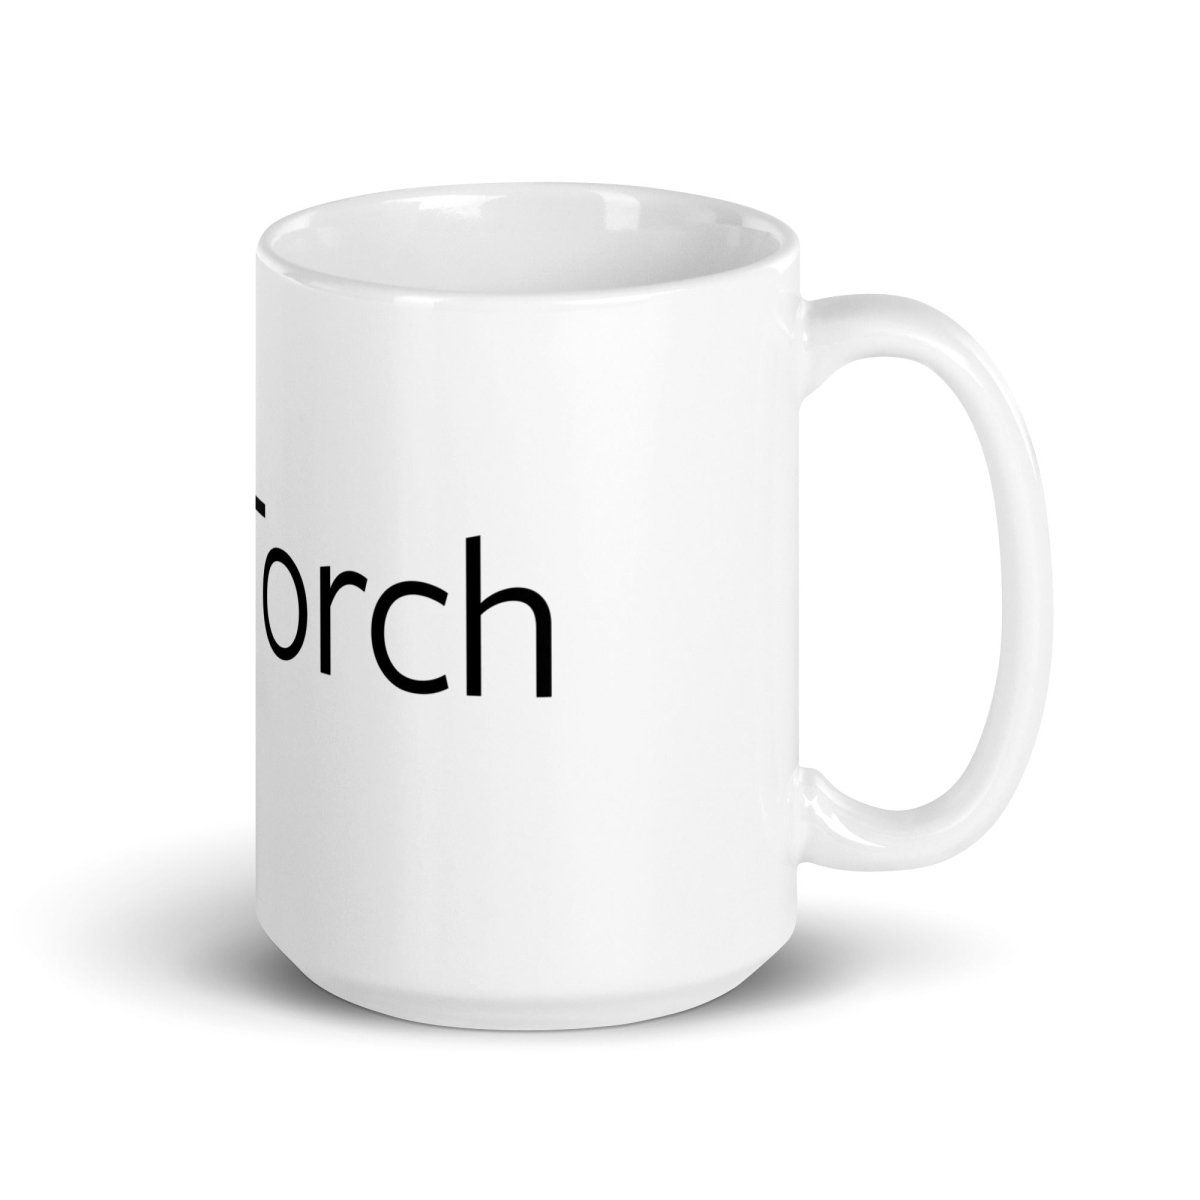 PyTorch Logo on White Glossy Mug - 15 oz - AI Store